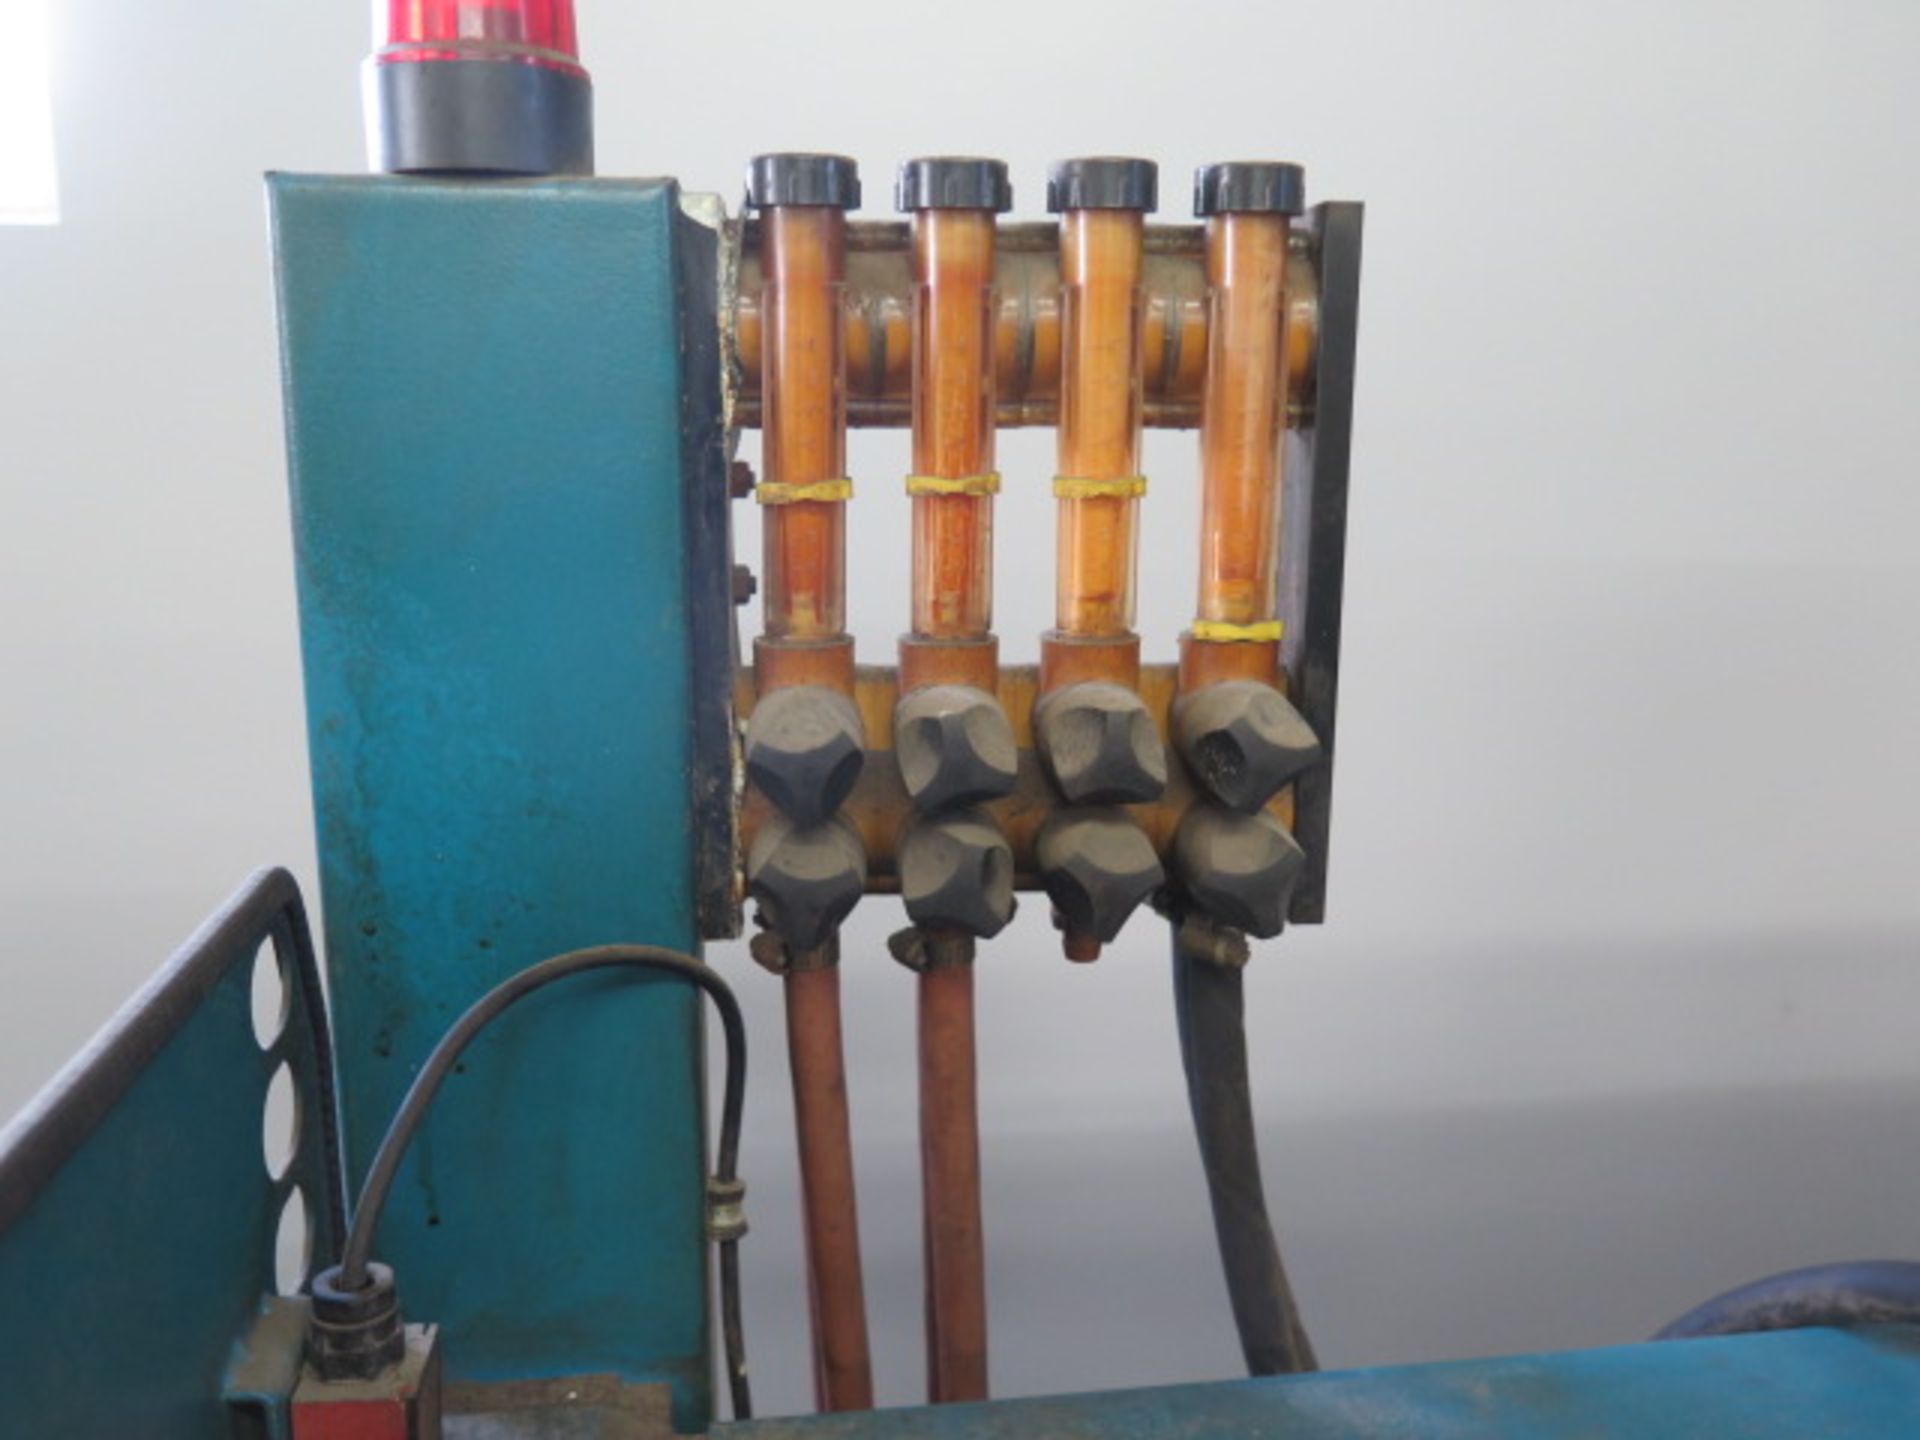 Boy 22D Plastic Injection Molding Machine s/n 29421 w/ Boy Controls, 8 ¾” x 10” Between Posts, - Image 13 of 17